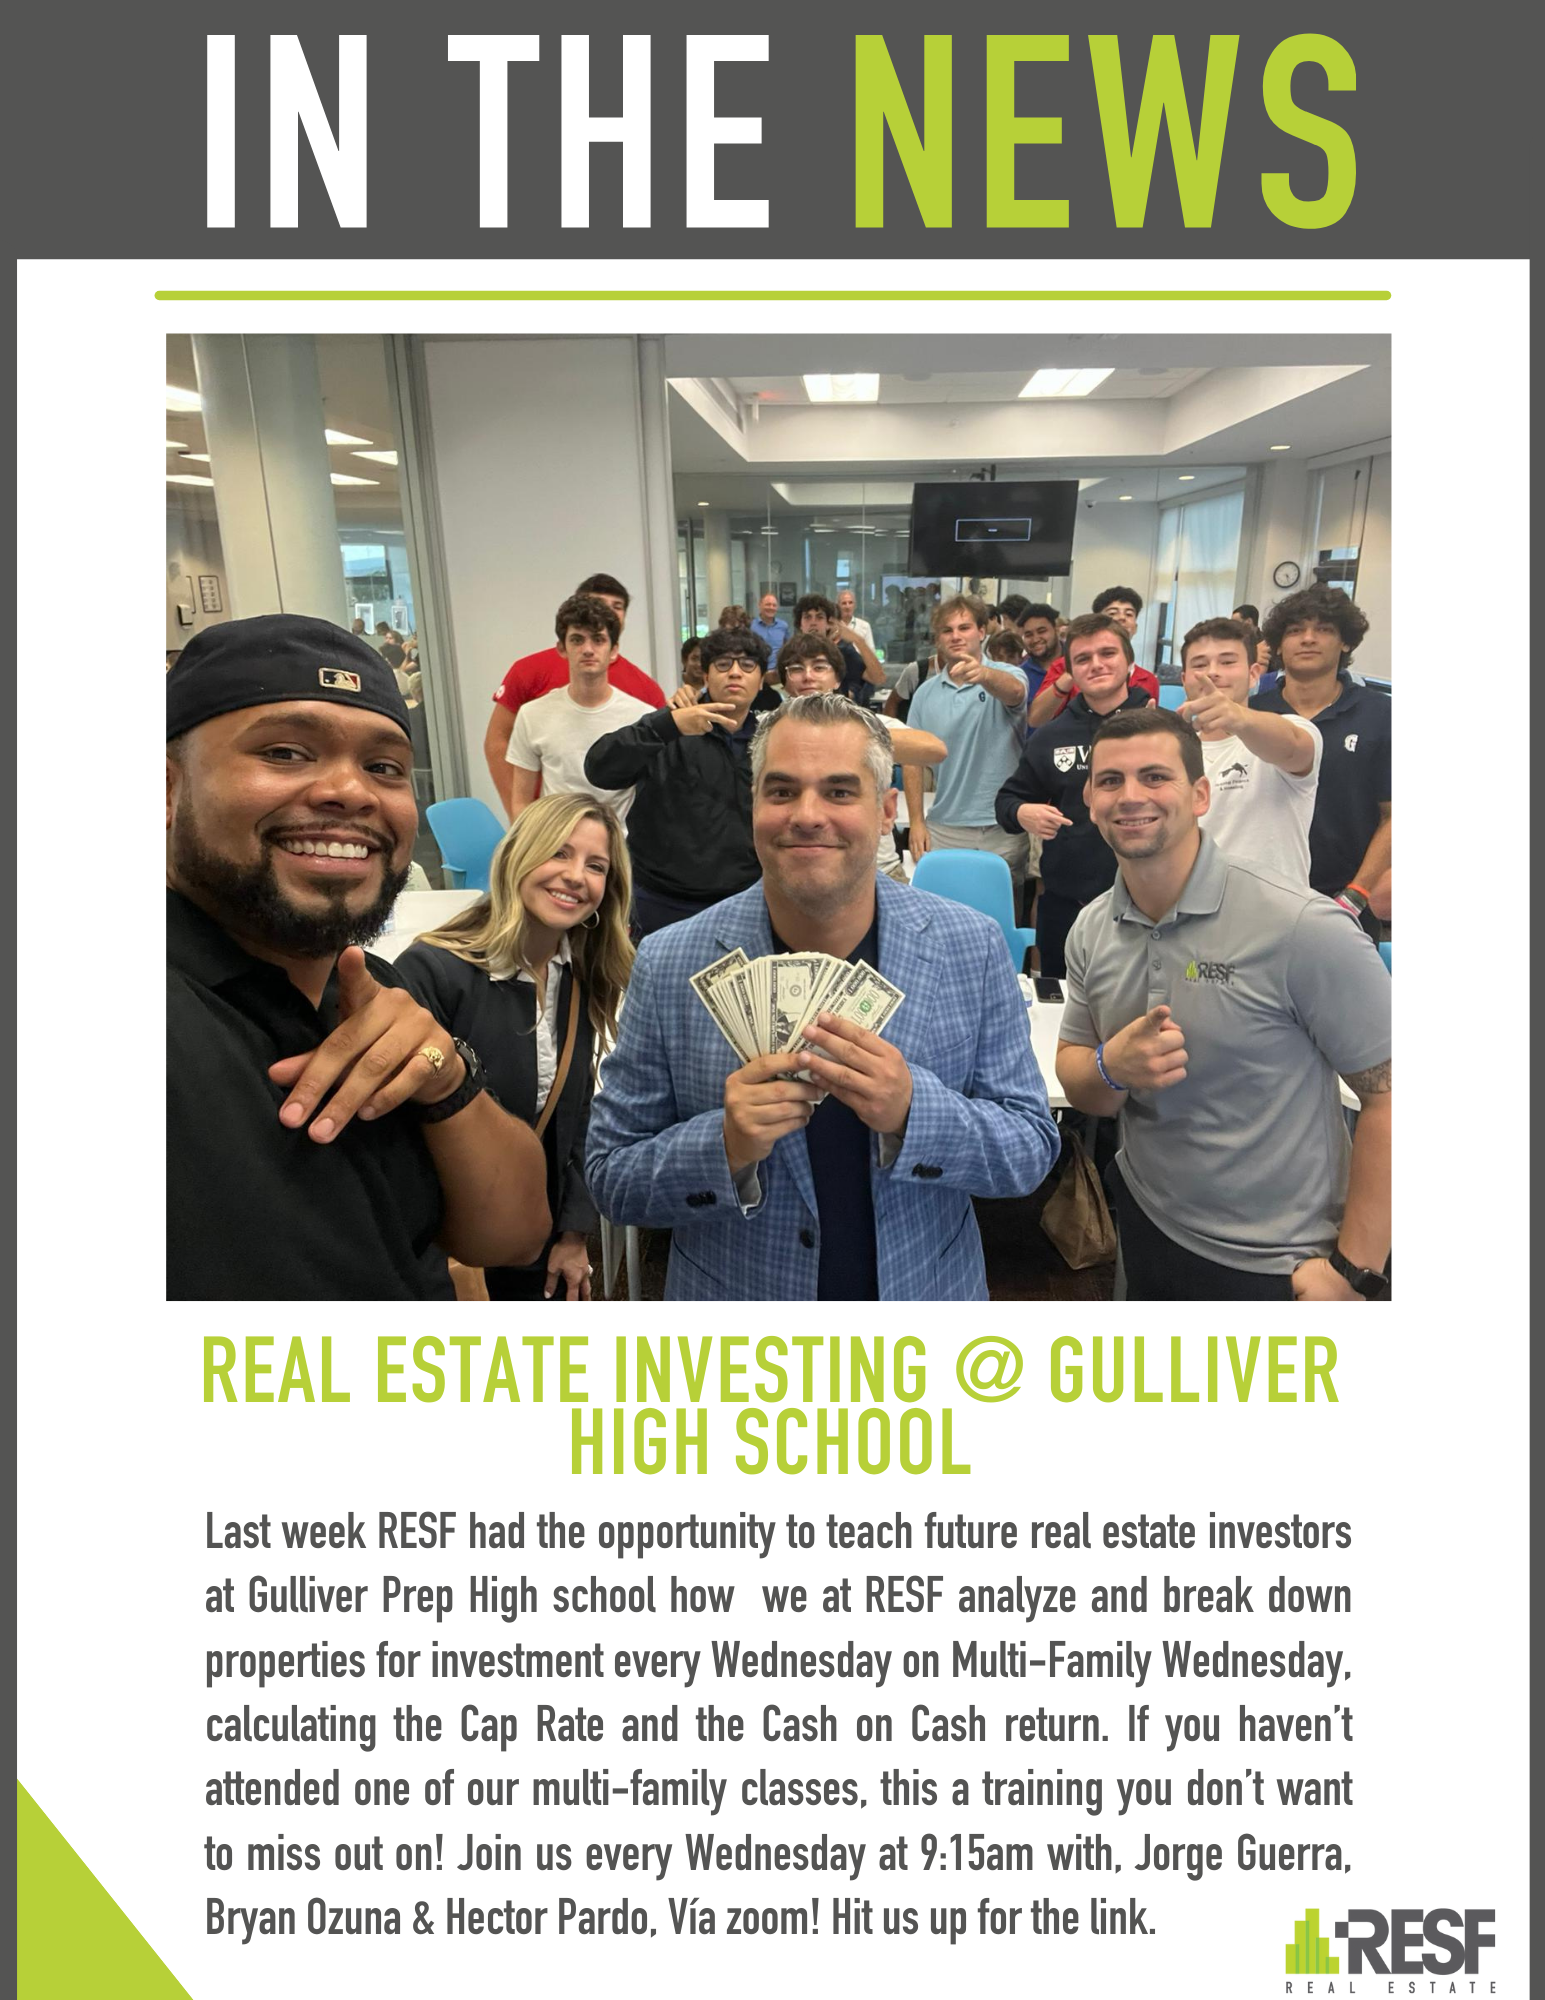 Real estate investing @ Gulliver High School